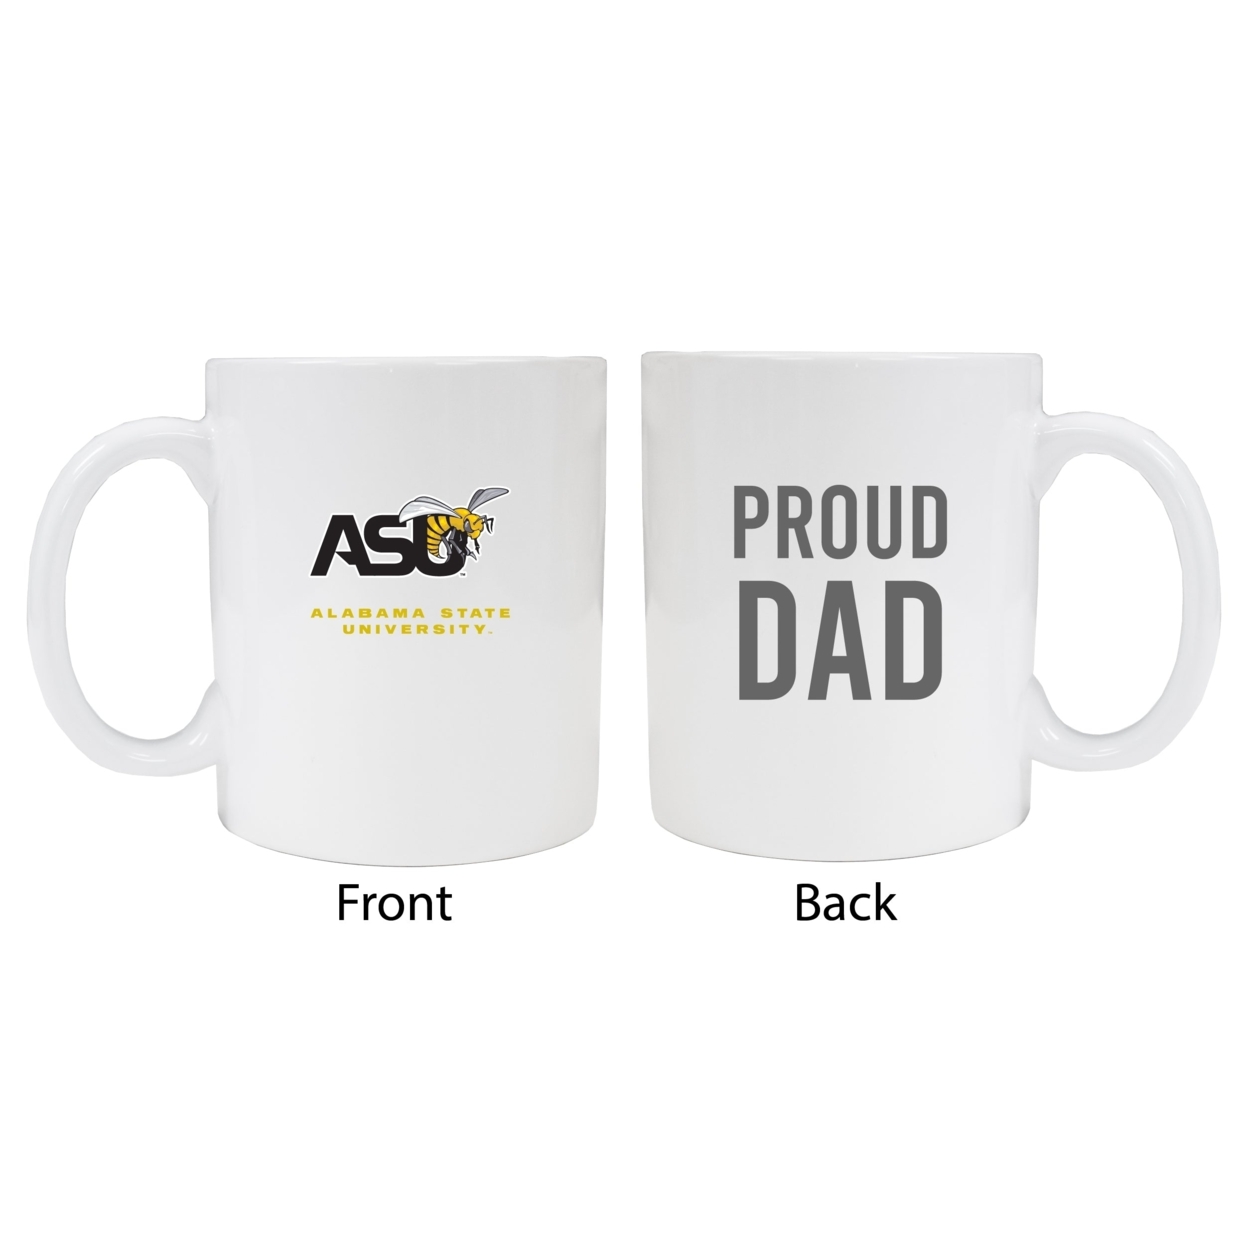 Alabama State University Proud Dad Ceramic Coffee Mug - White